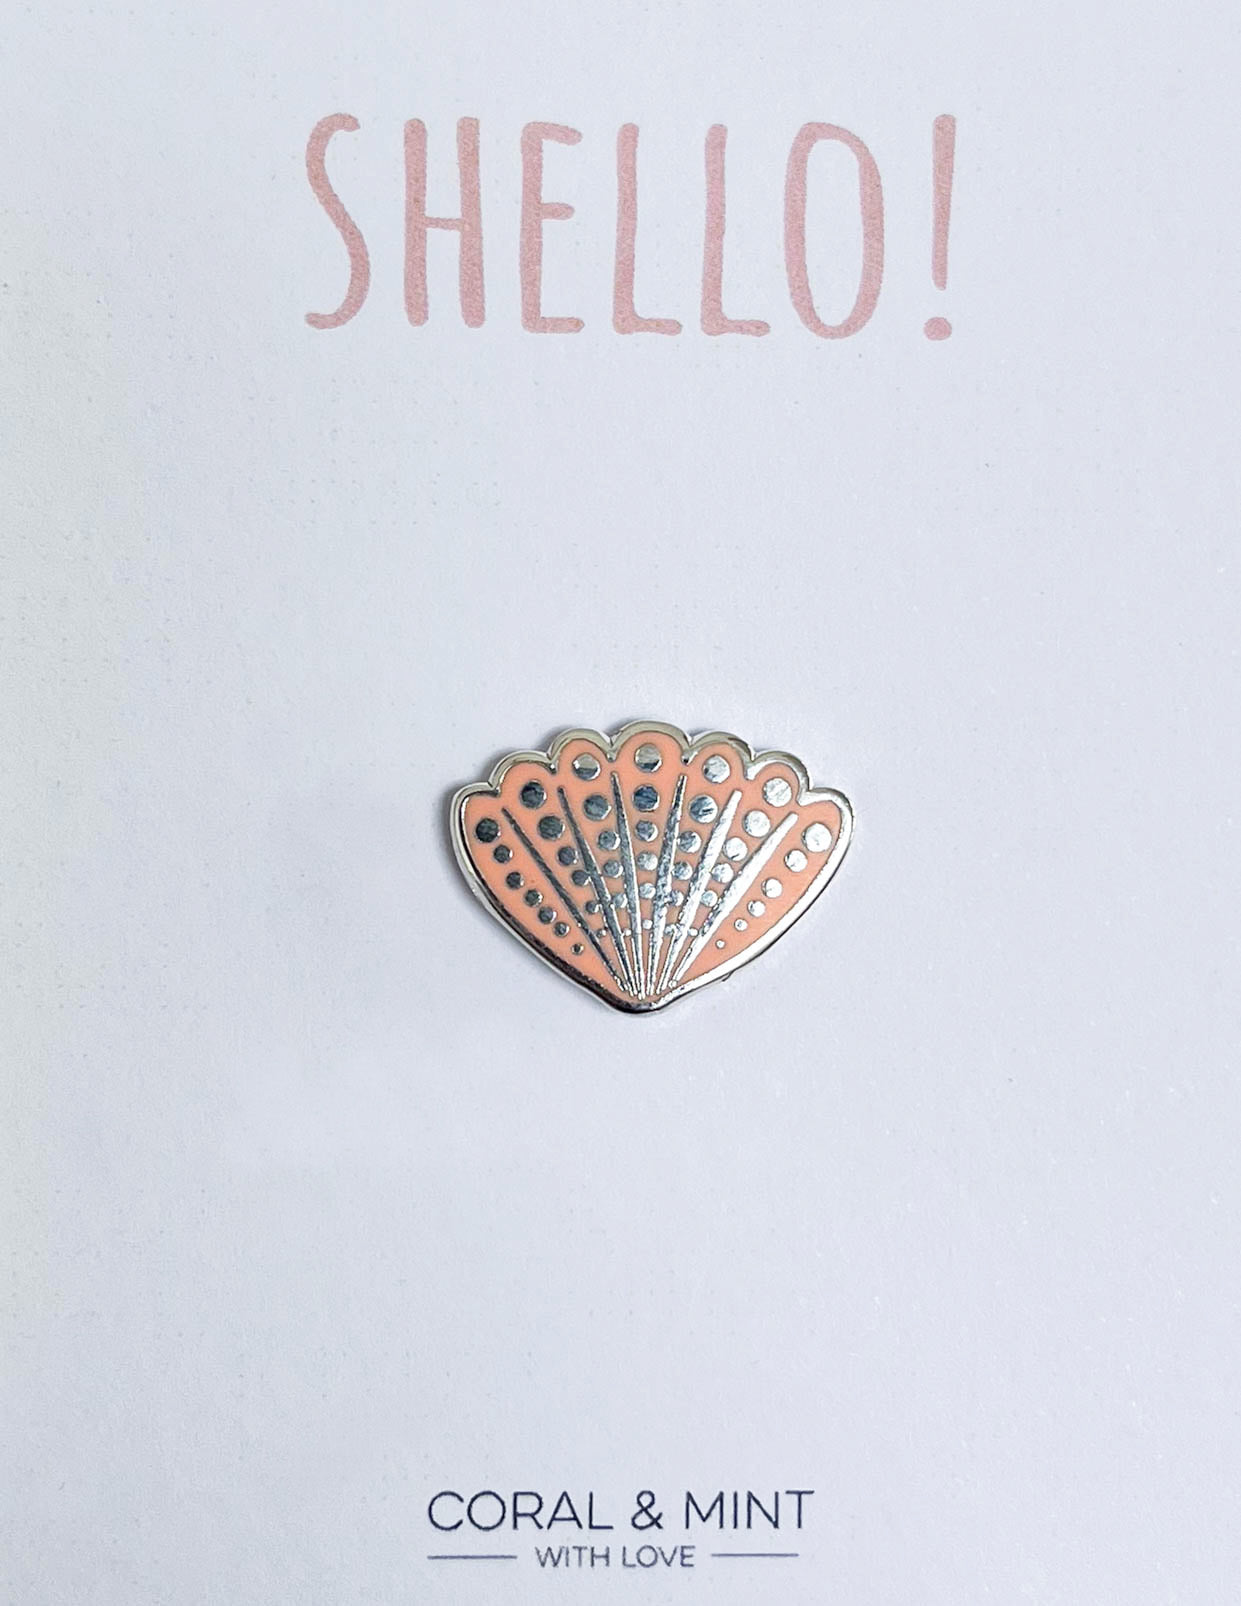 Shell enamel pin